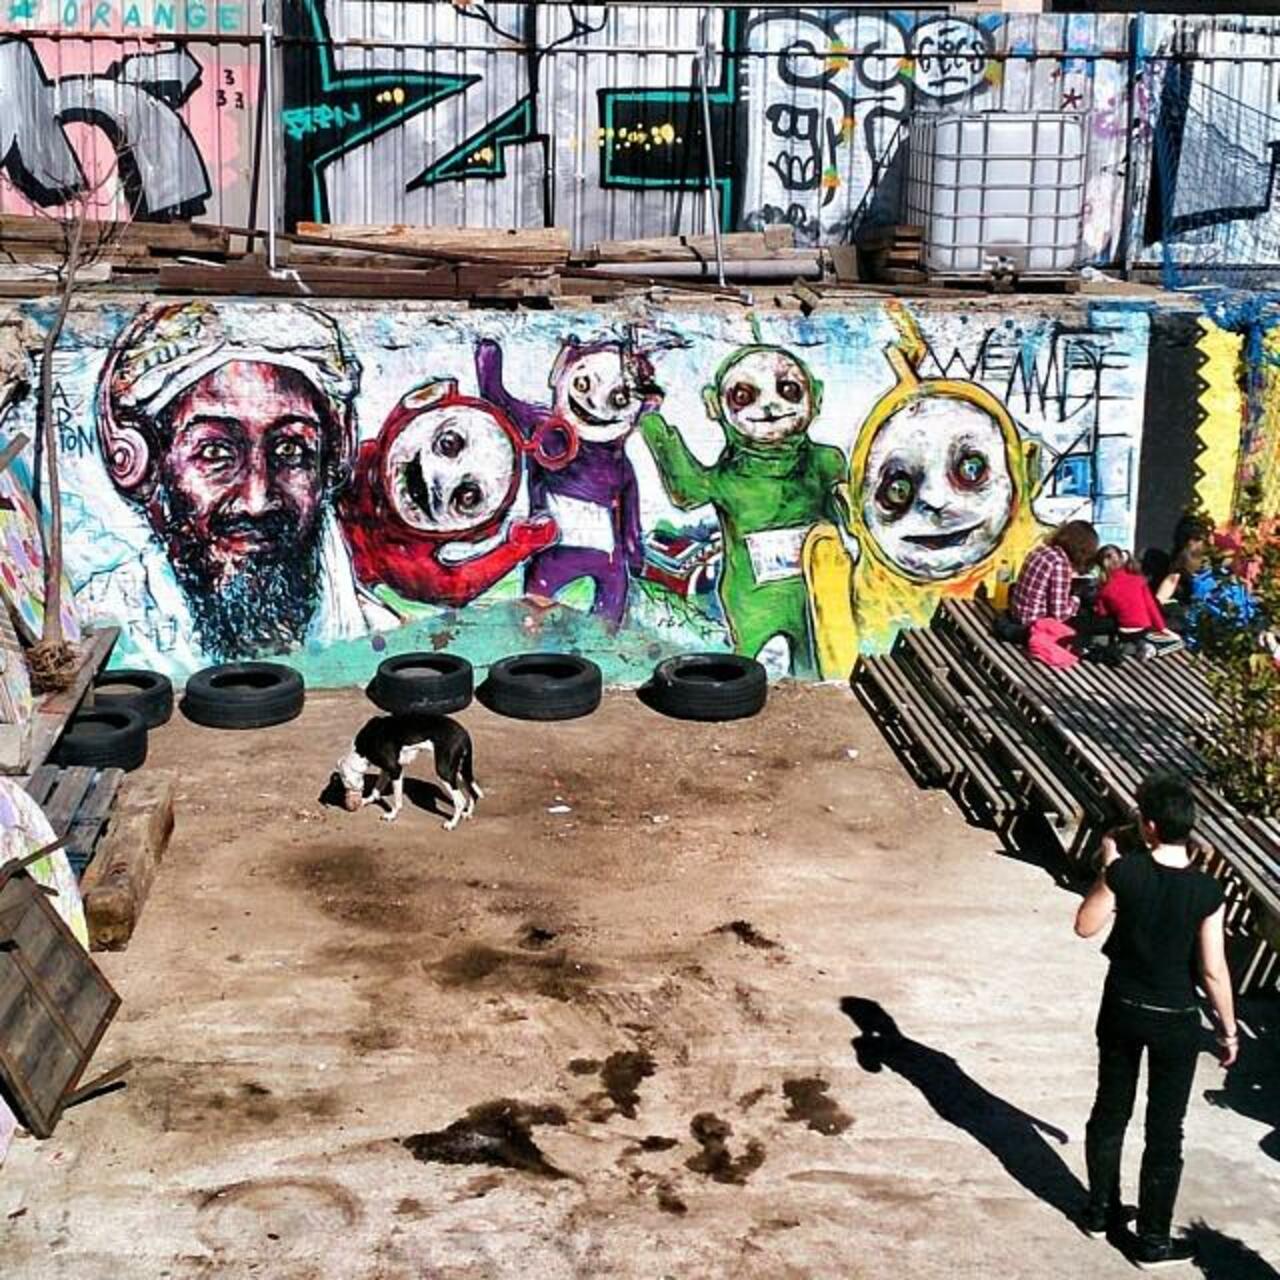 zecarrion #zecarrion #madrid #lalatina #campodelacebada #graffiti #painting #mural #muralart #spraycanart #streetar… http://t.co/uo5EcQaOSK